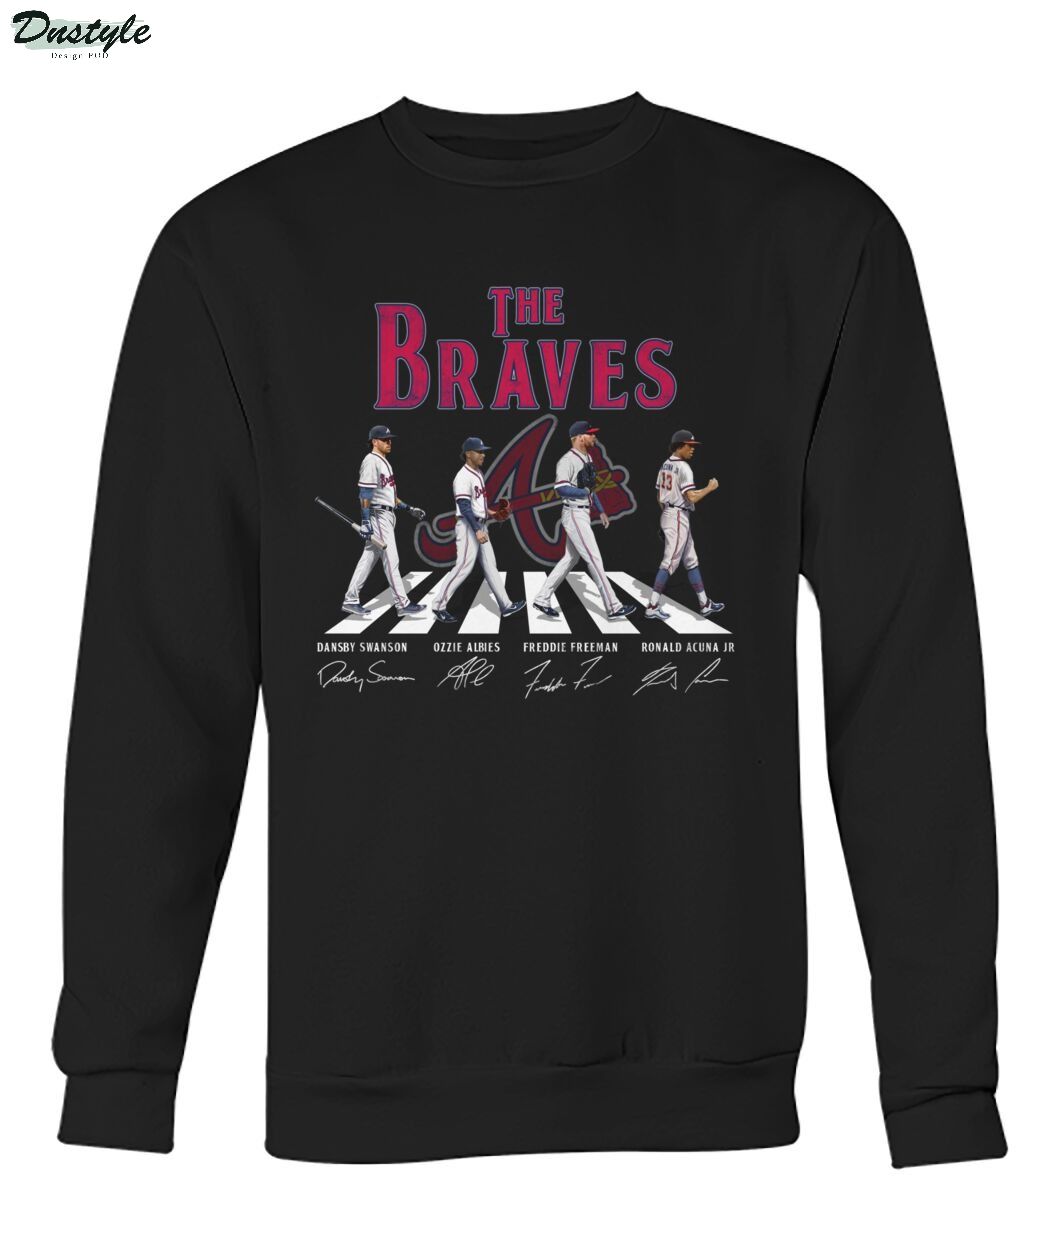 The braves walking across the street sweatshirt